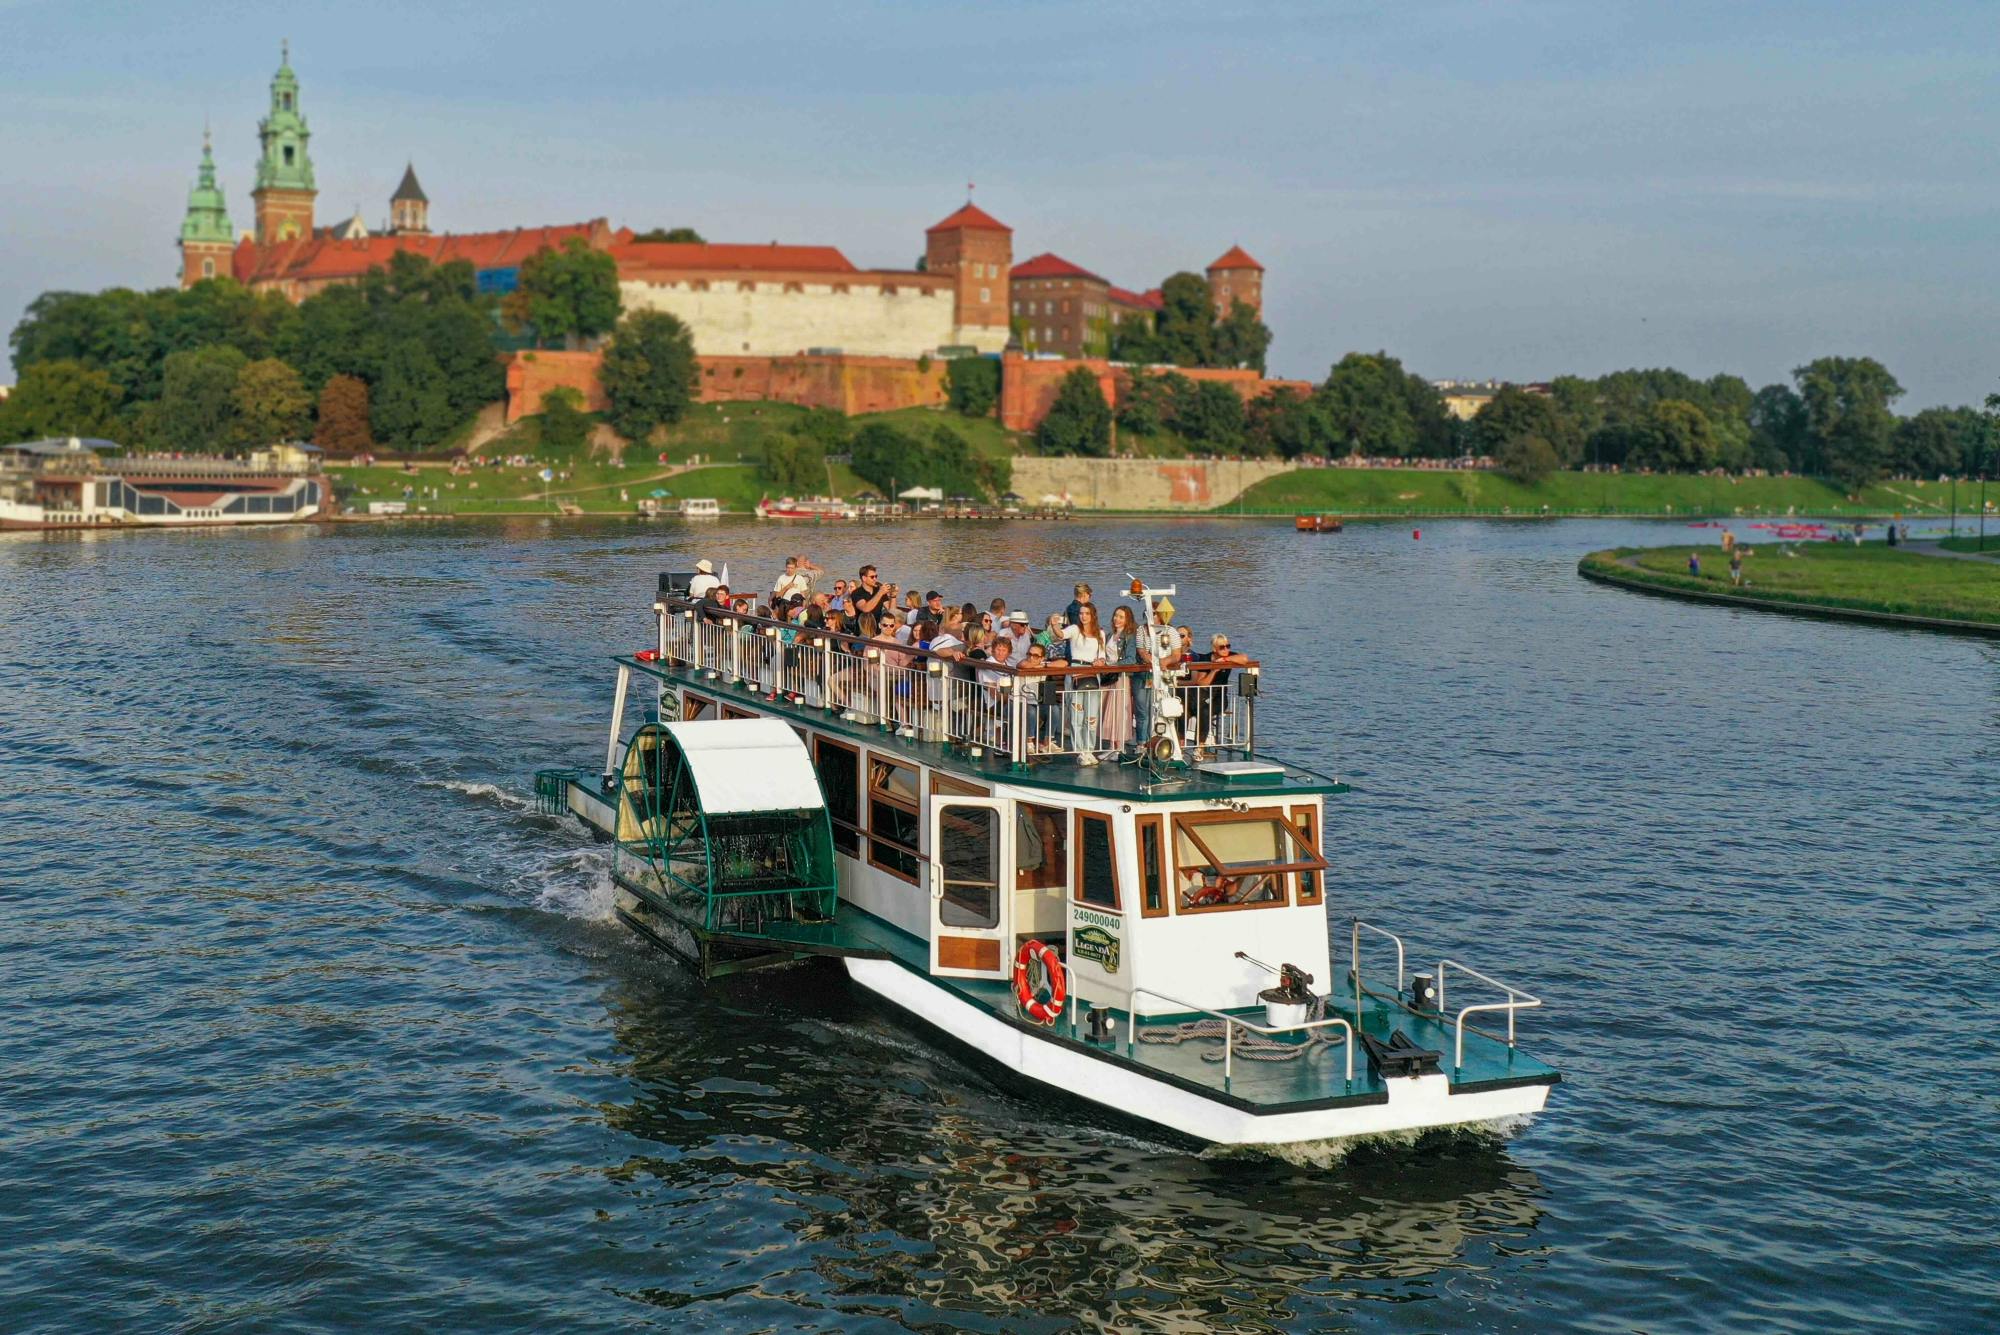 Sightseeingcruise op de rivier de Vistula in Krakau